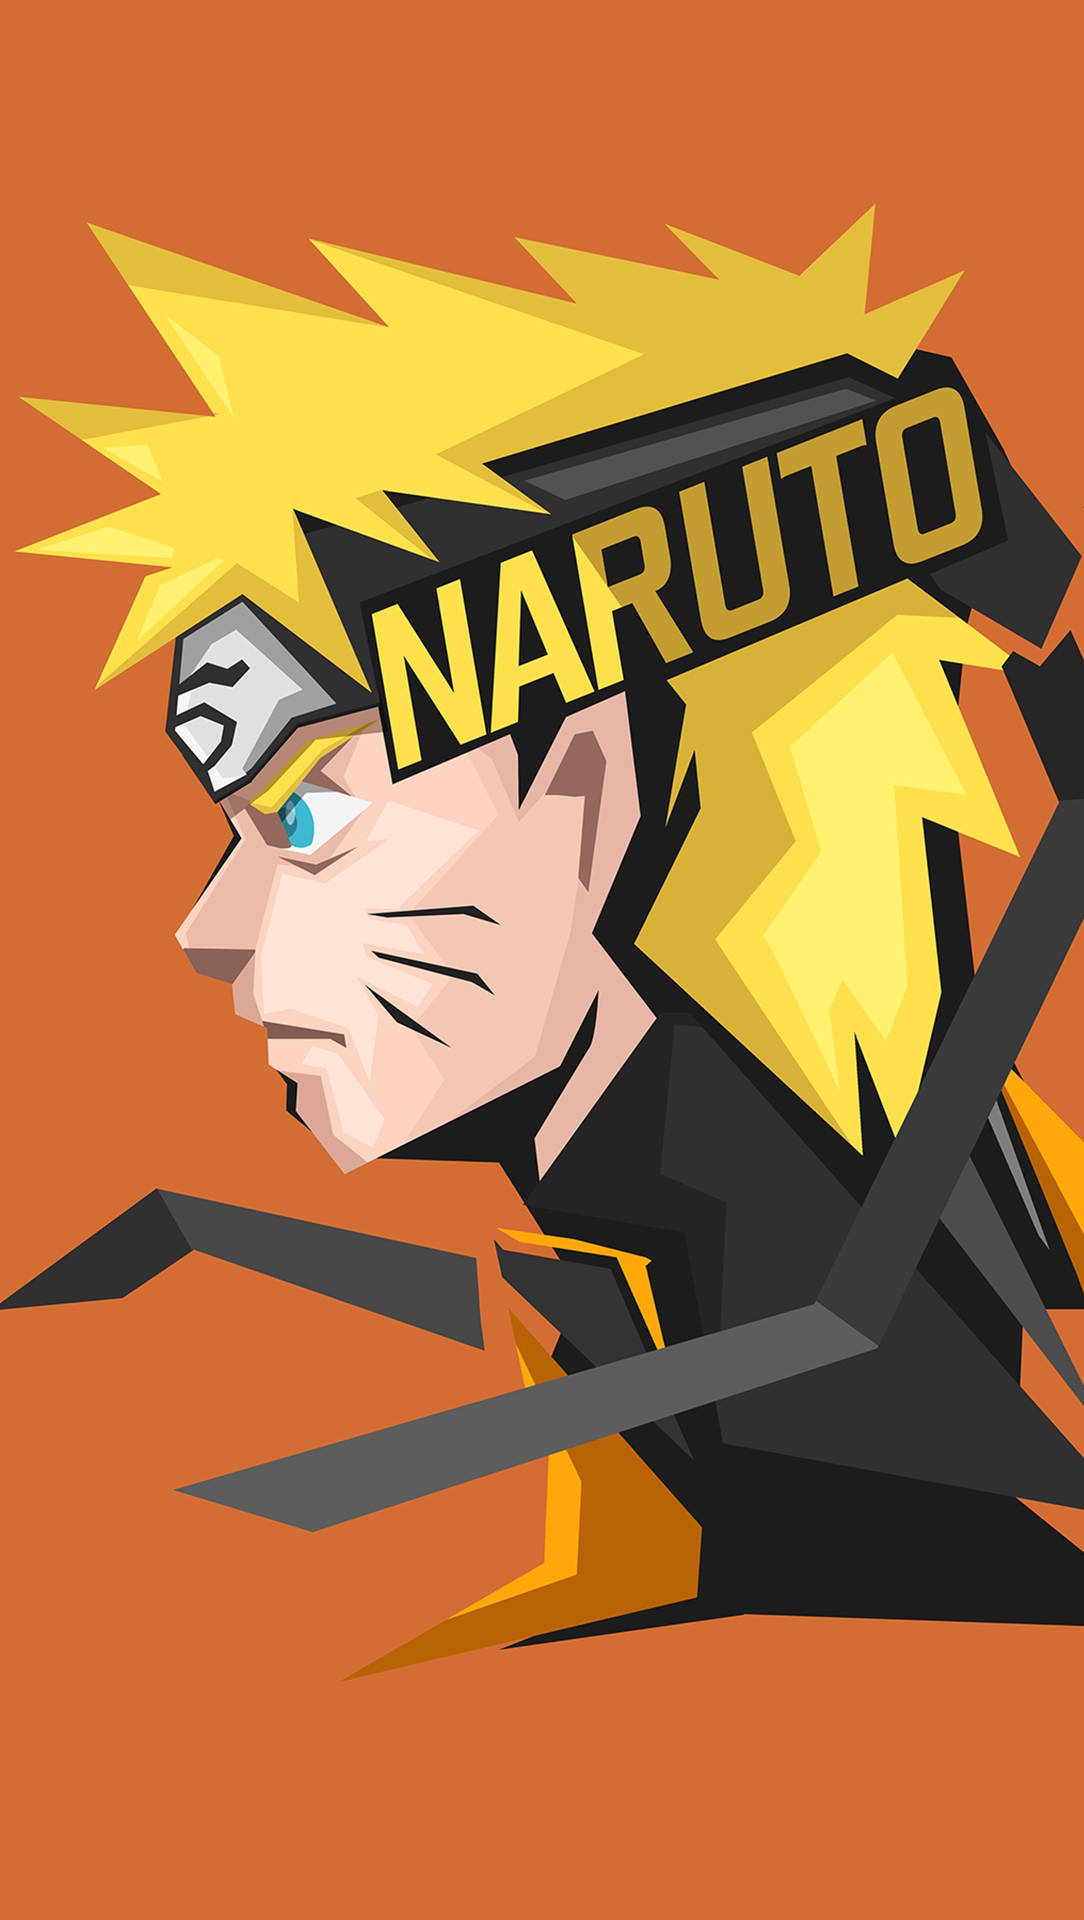 Free Naruto Mobile 4k Wallpaper Downloads, [100+] Naruto Mobile 4k  Wallpapers for FREE 